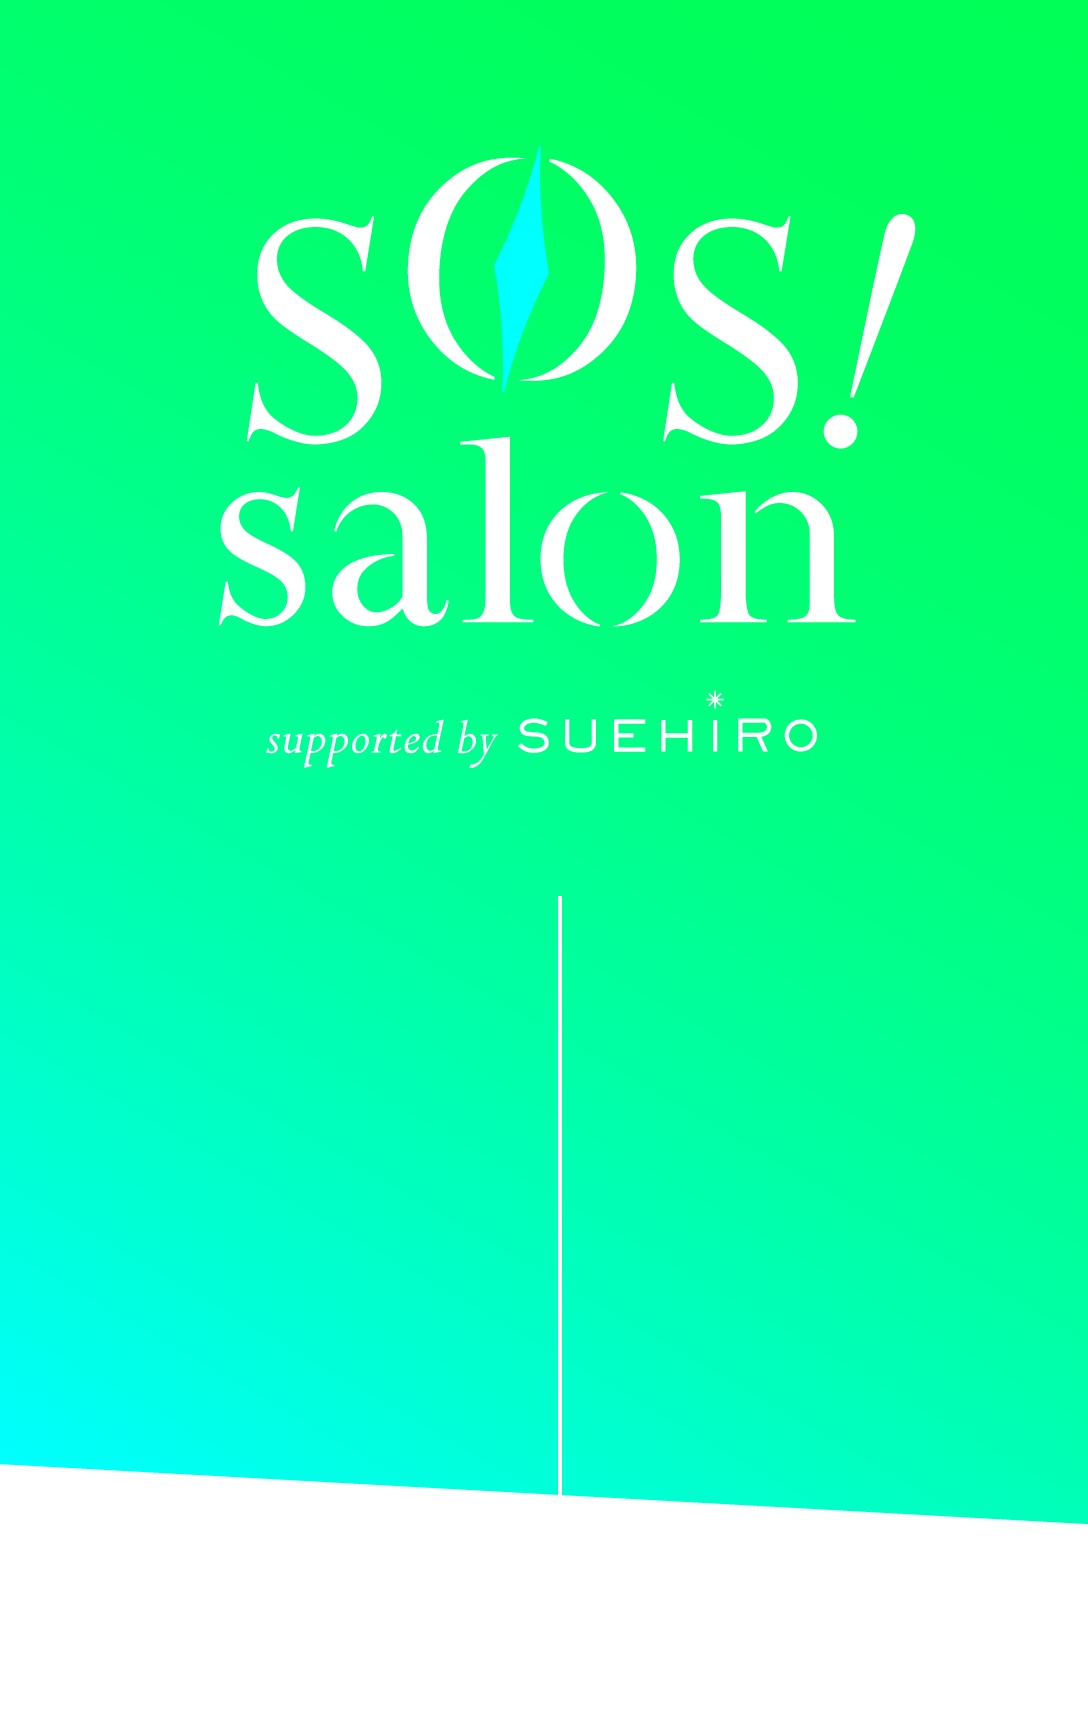 SOS! salon